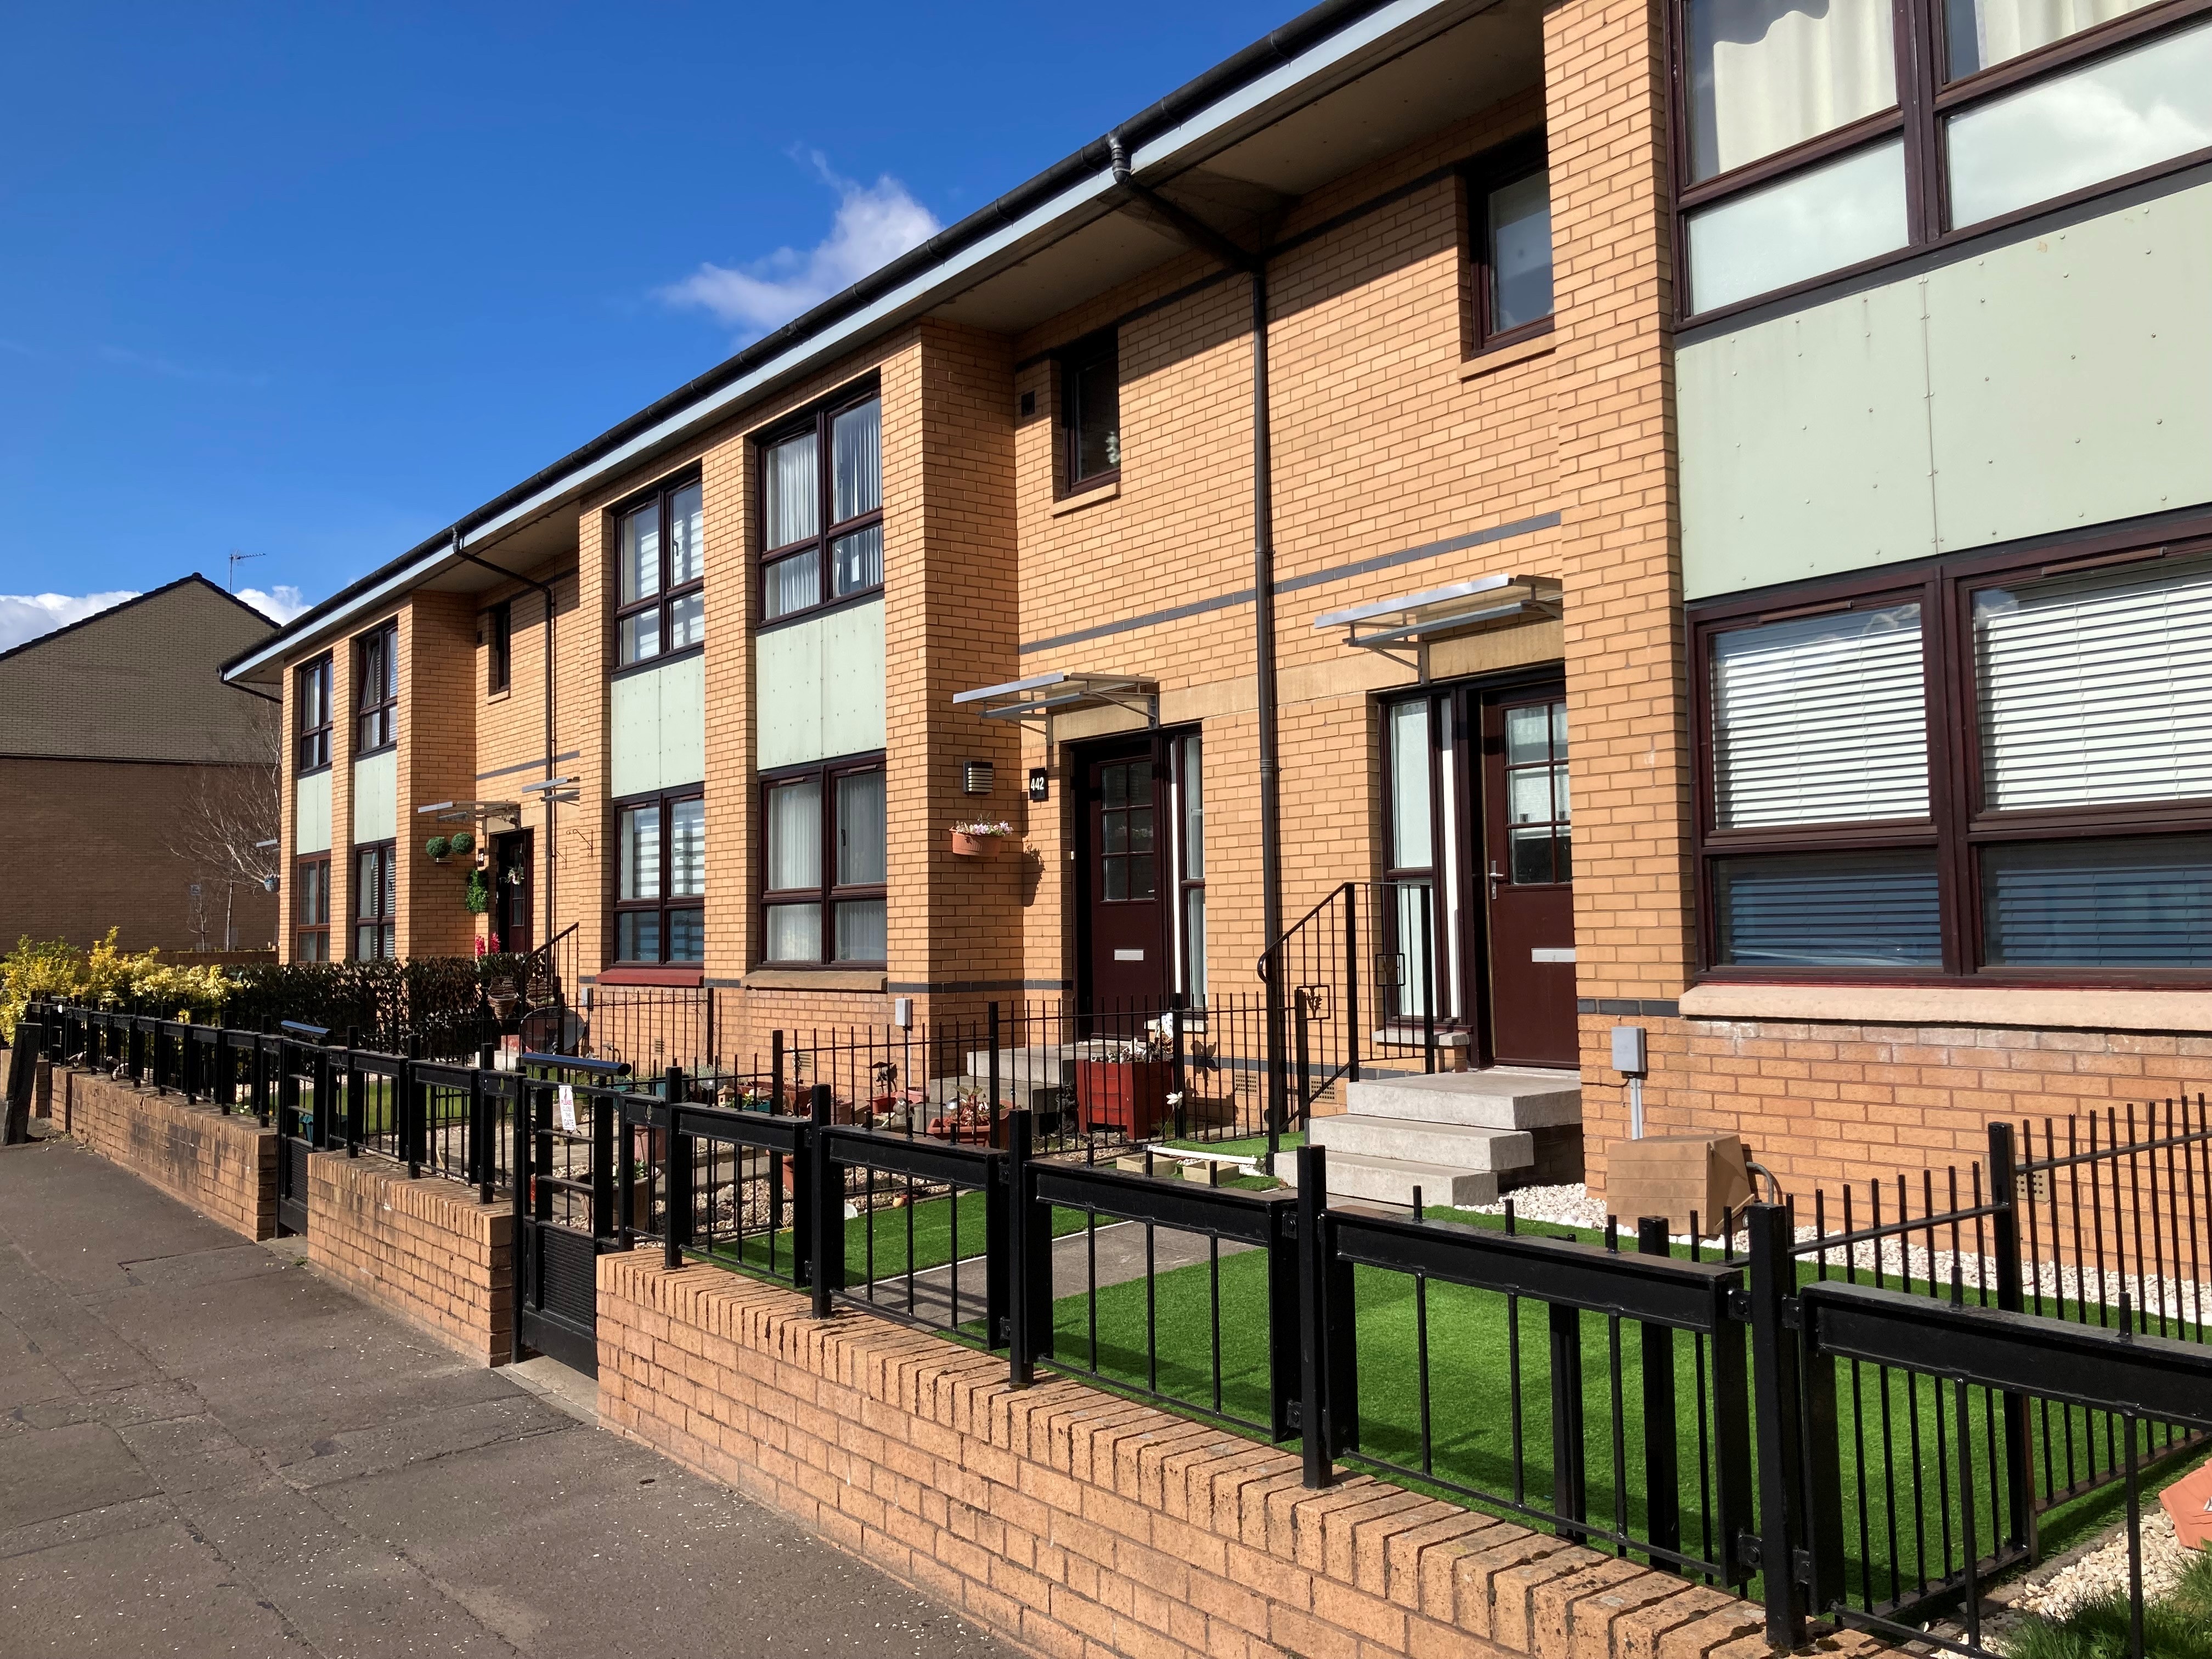 All Trafalgar Housing Association tenants given cost of living boost